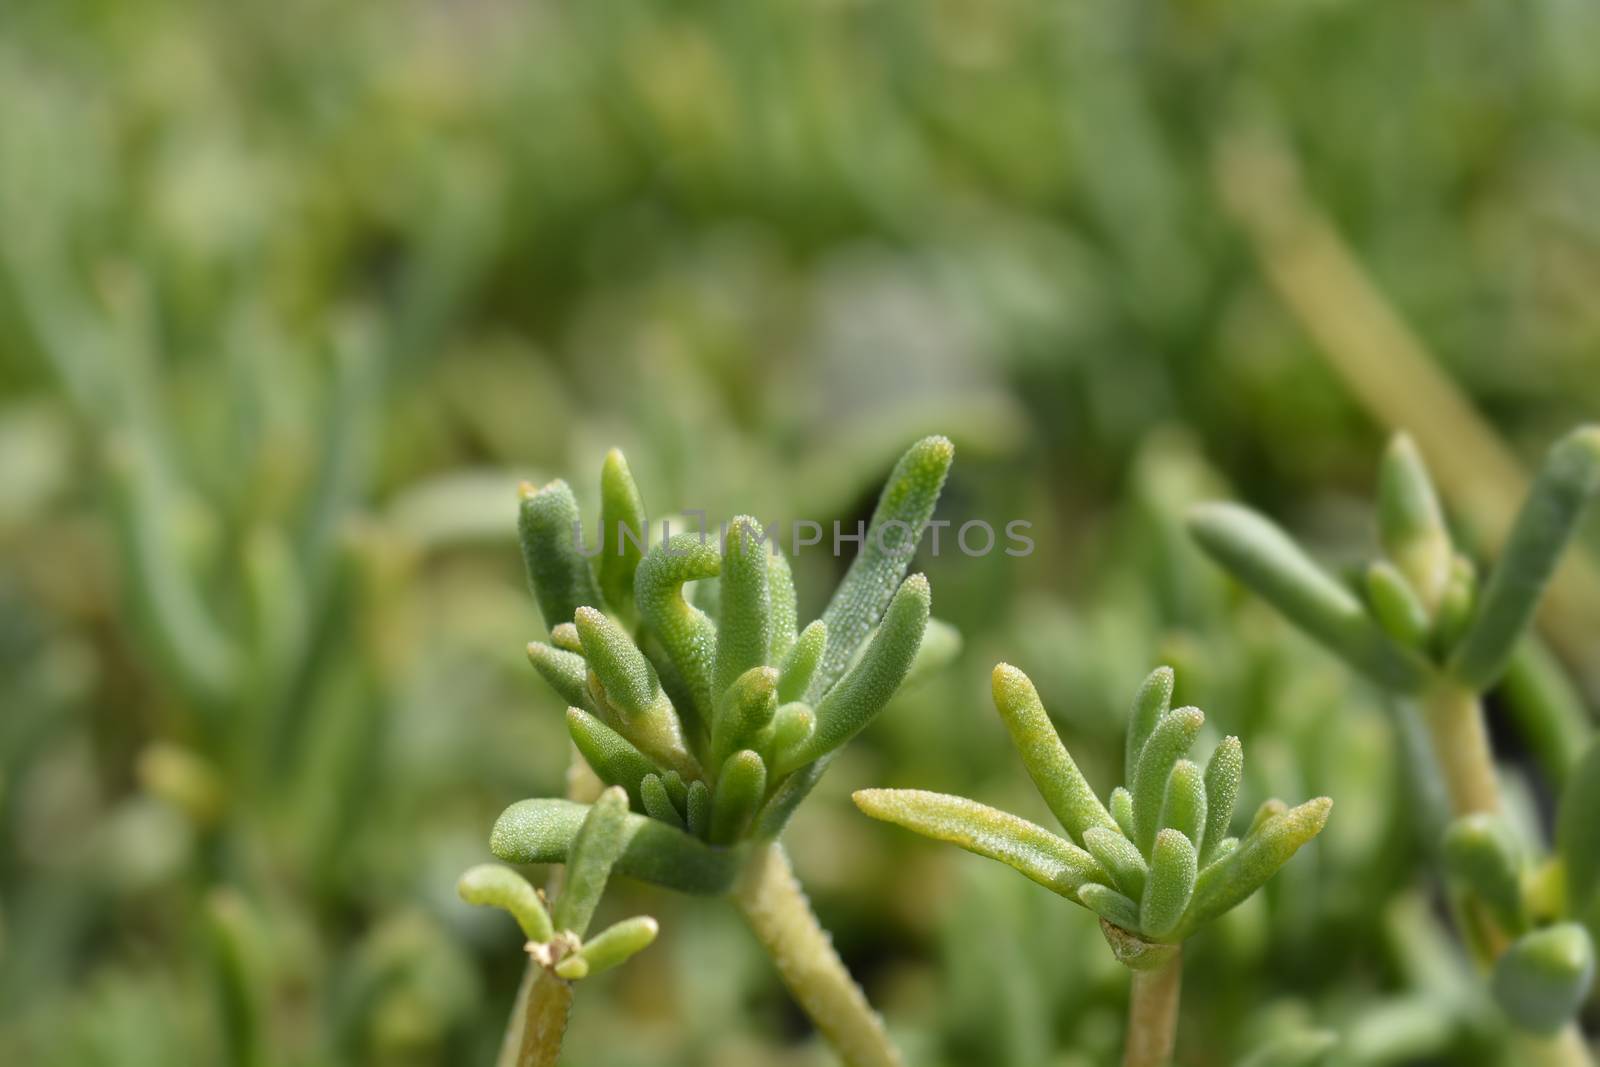 Trailing Iceplant leaves - Latin name - Delosperma cooperi